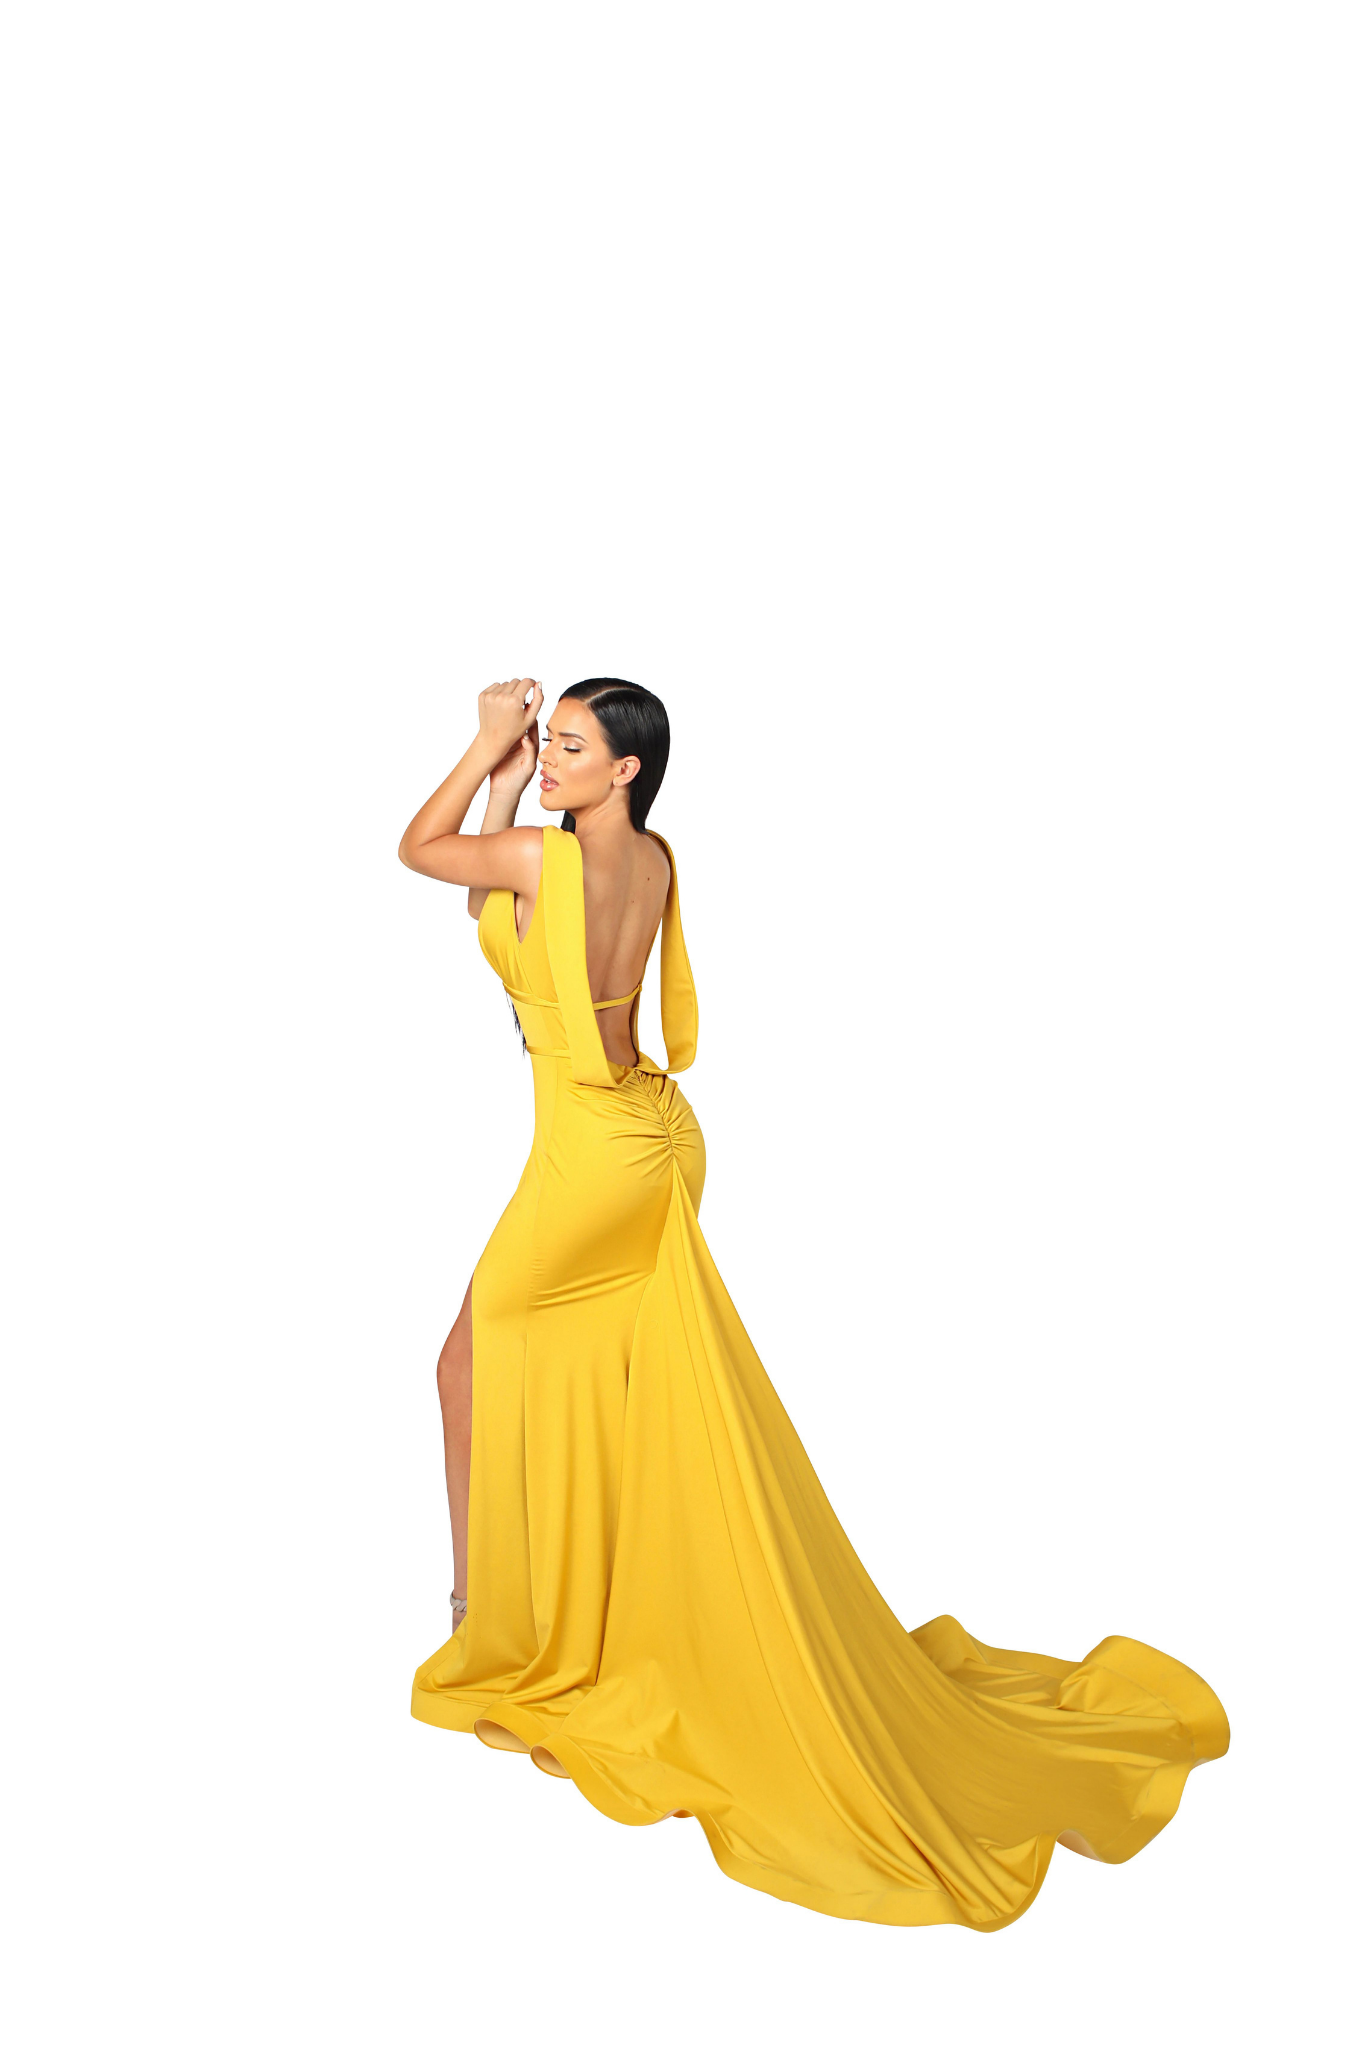 Model wearing a bright yellow evening dress